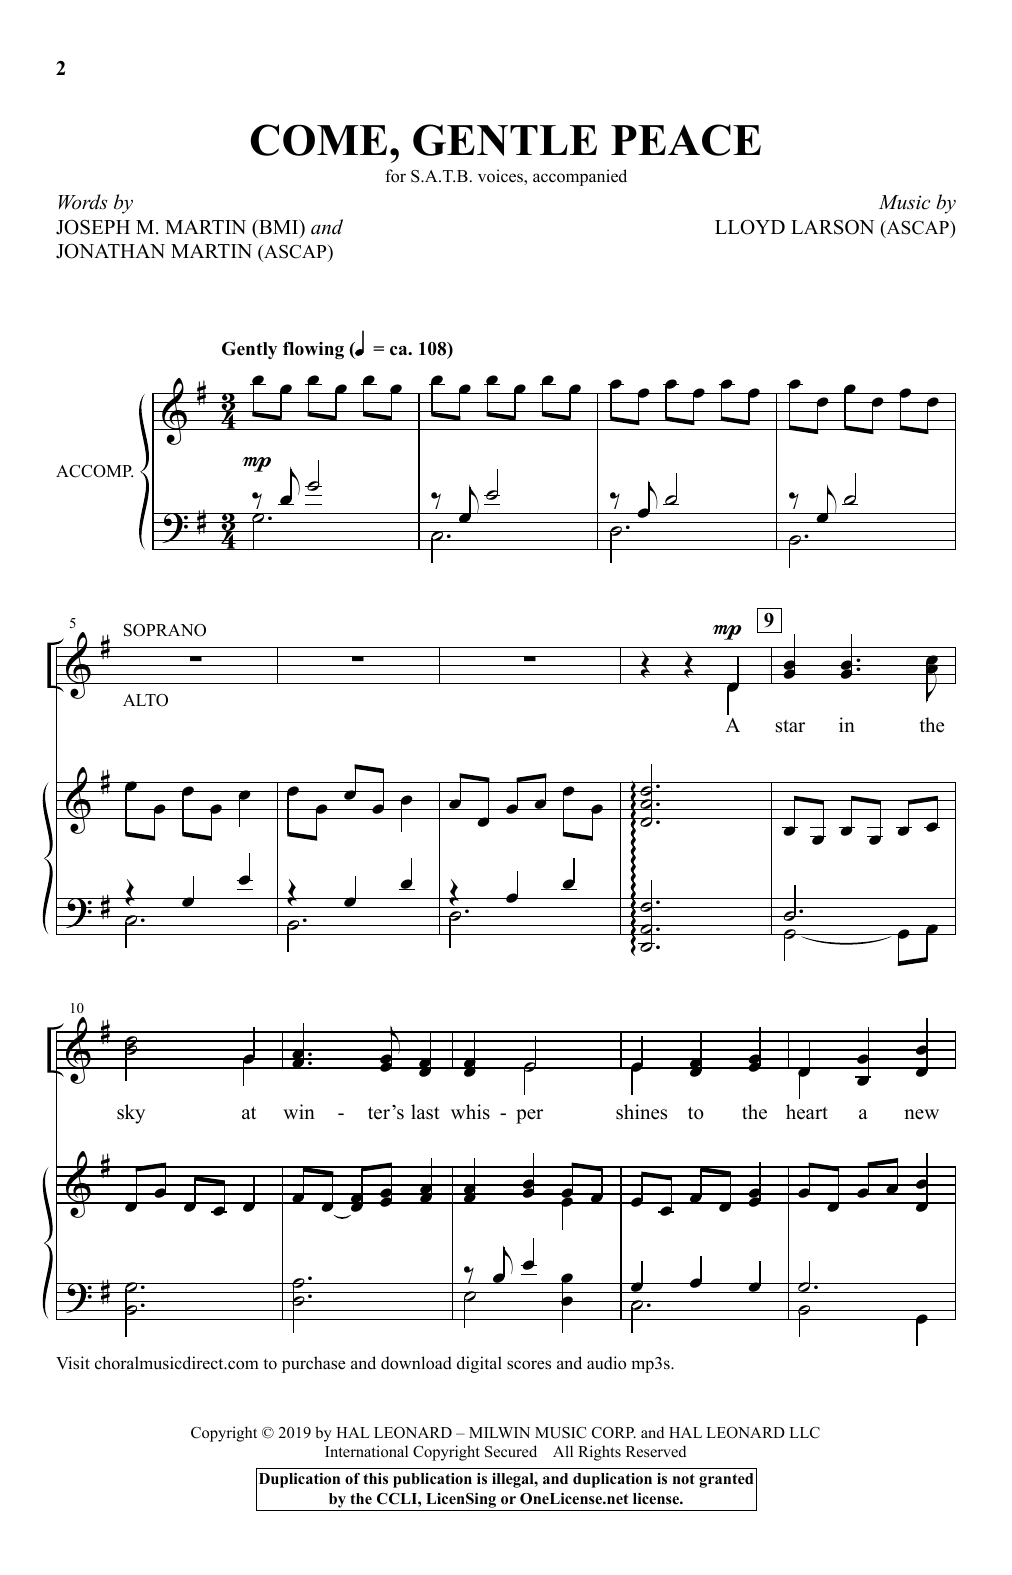 Joseph Martin, Jonathan Martin & Lloyd Larson Come, Gentle Peace Sheet Music Notes & Chords for SATB Choir - Download or Print PDF